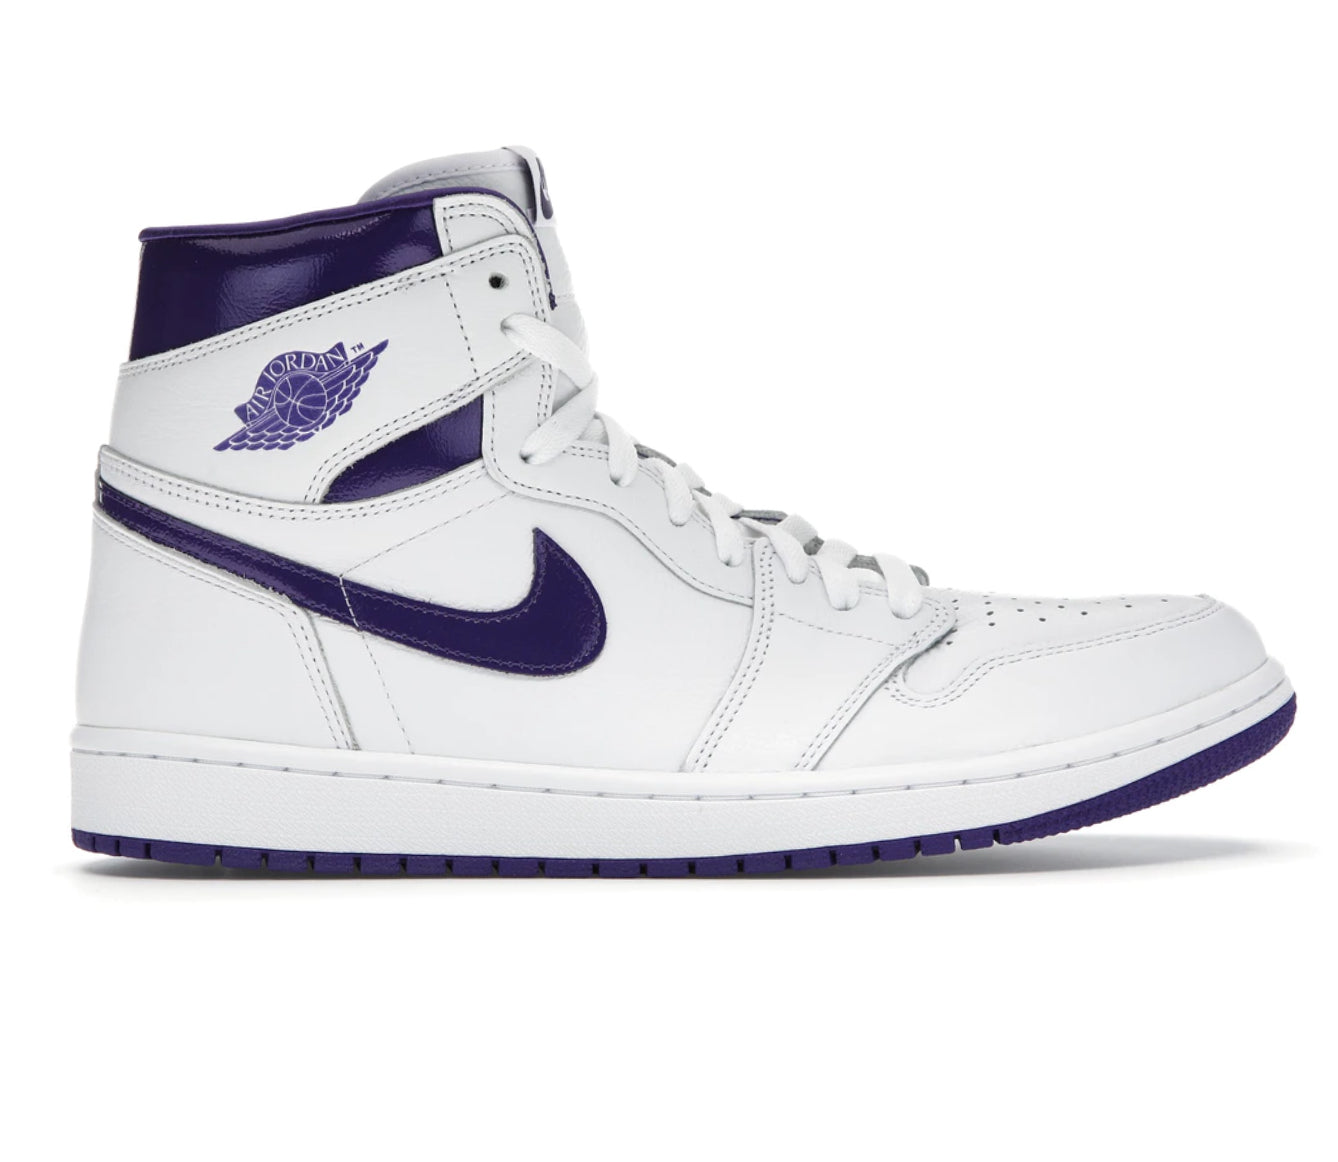 Jordan 1 Retro High “Court Purple” (W)